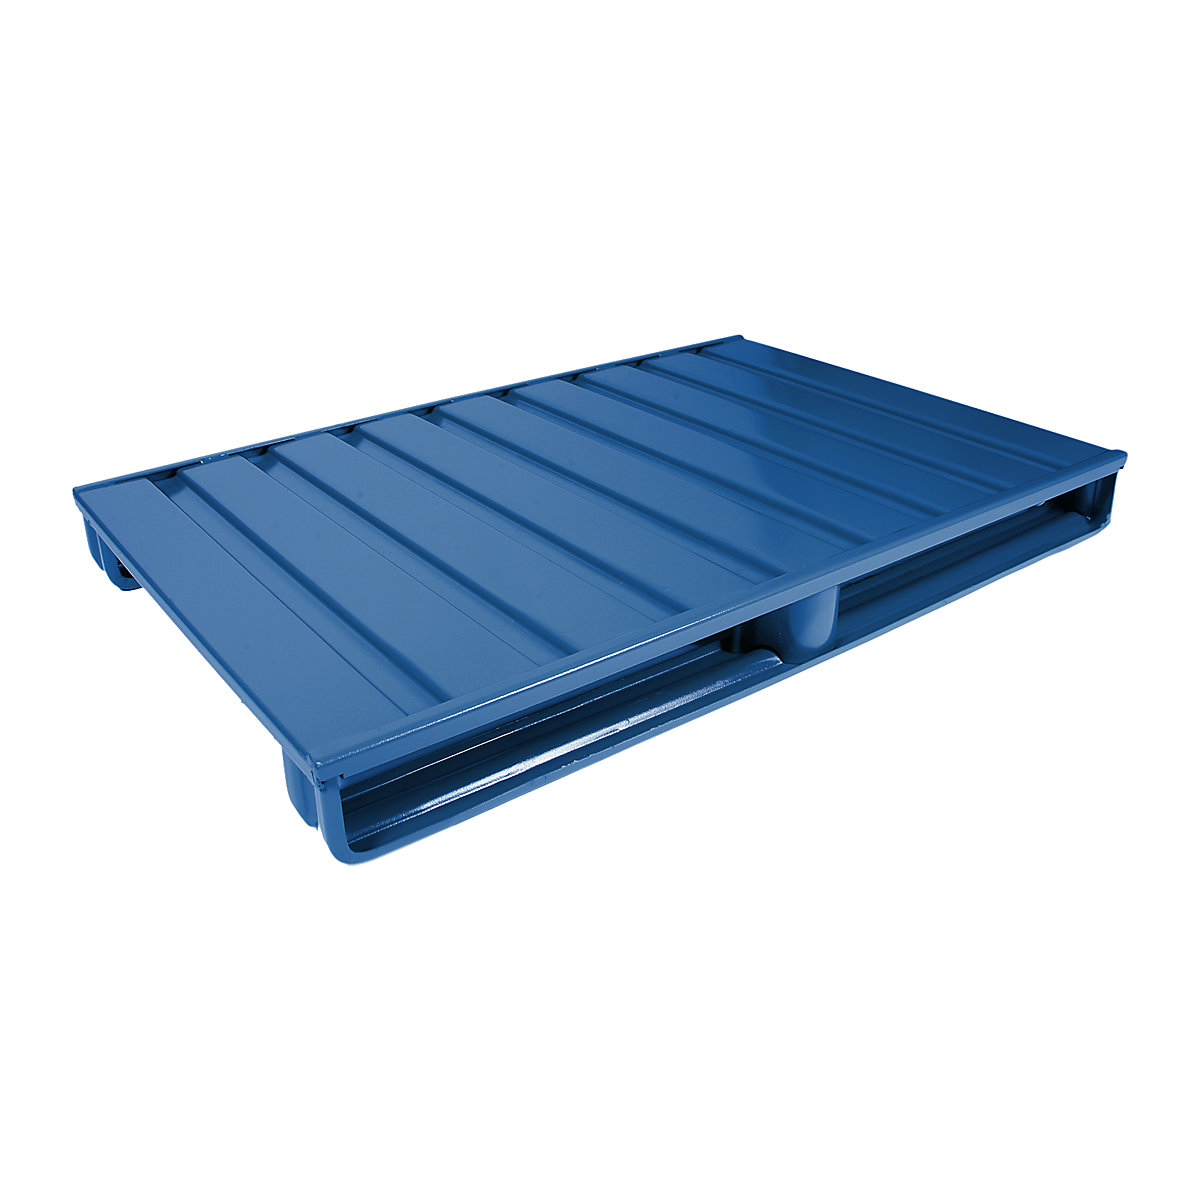 Flat steel pallet – Heson, LxW 1200 x 1000 mm, max. load 2000 kg, gentian blue-1